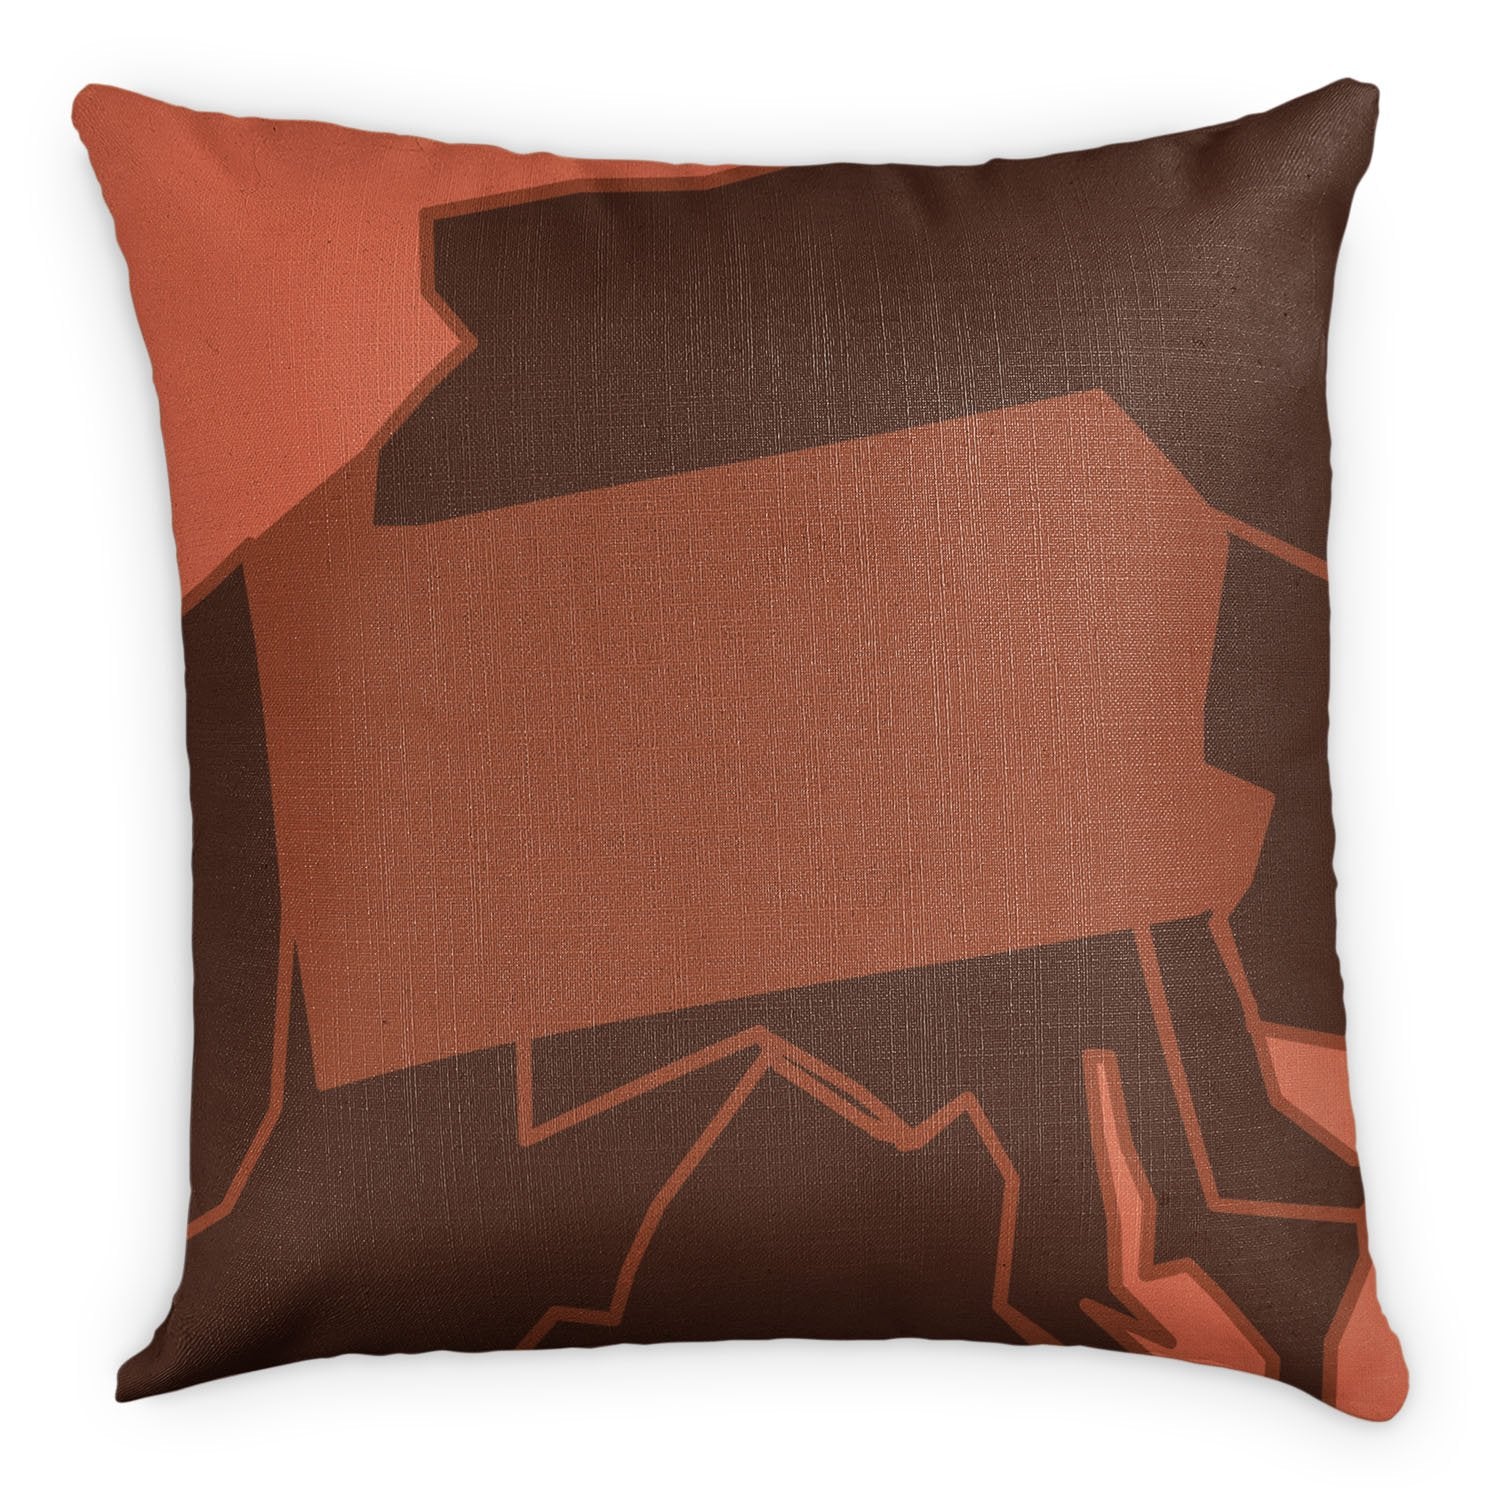 Pennsylvania Square Pillow - Linen -  - Knotty Tie Co.